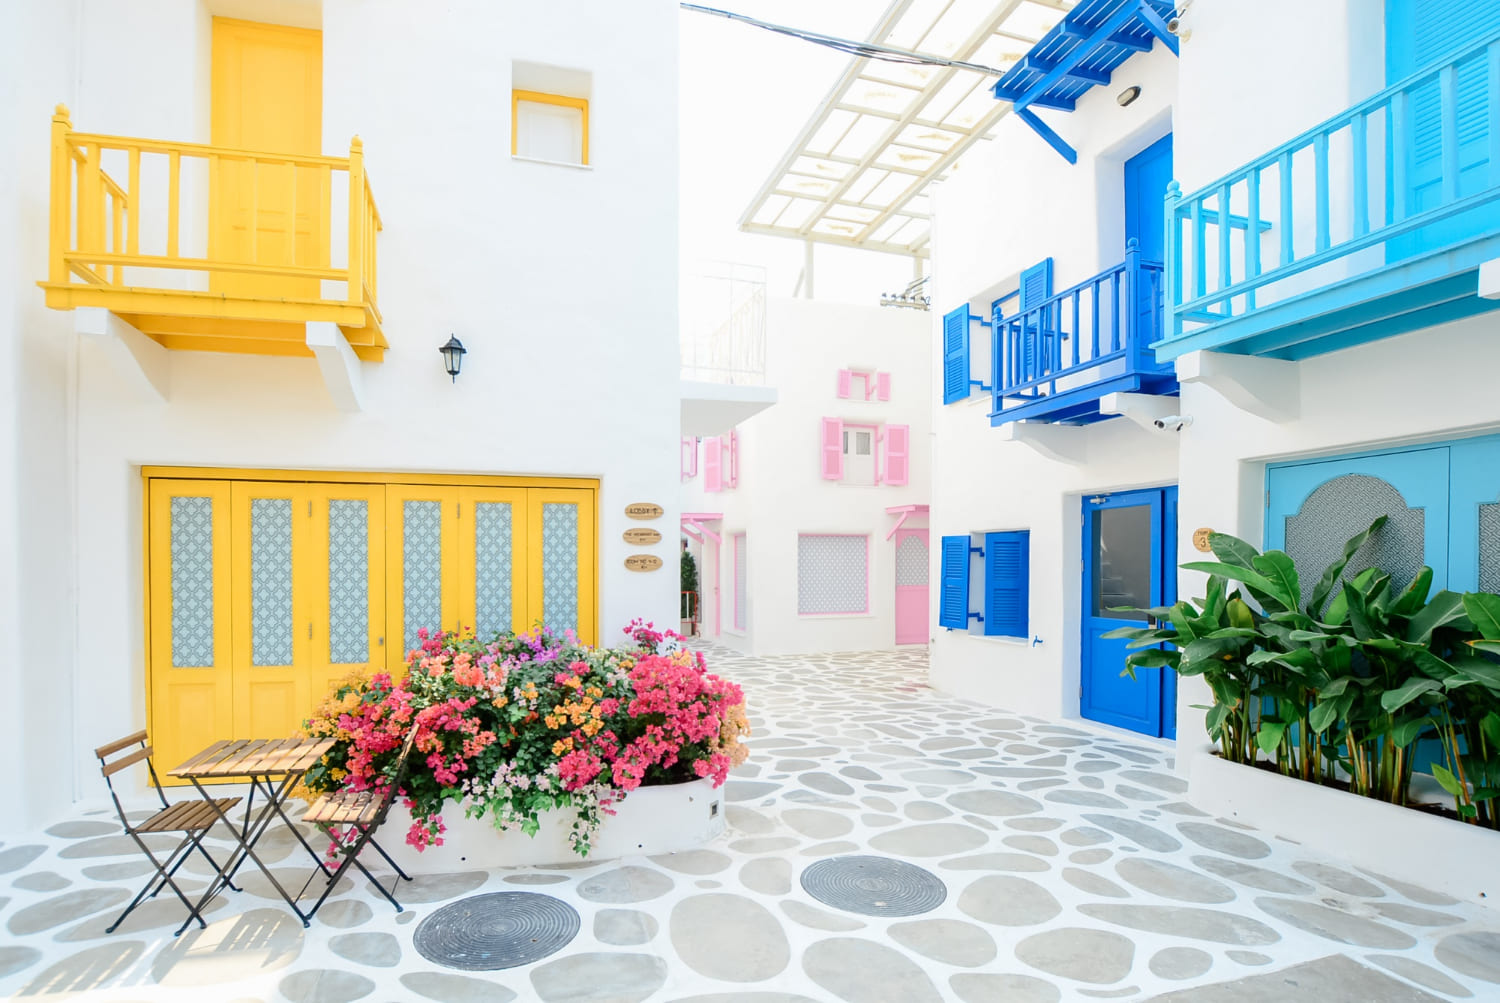 case in stil grecesc, fatada casa albastra, fatada casa galbena, plante, flori colorate